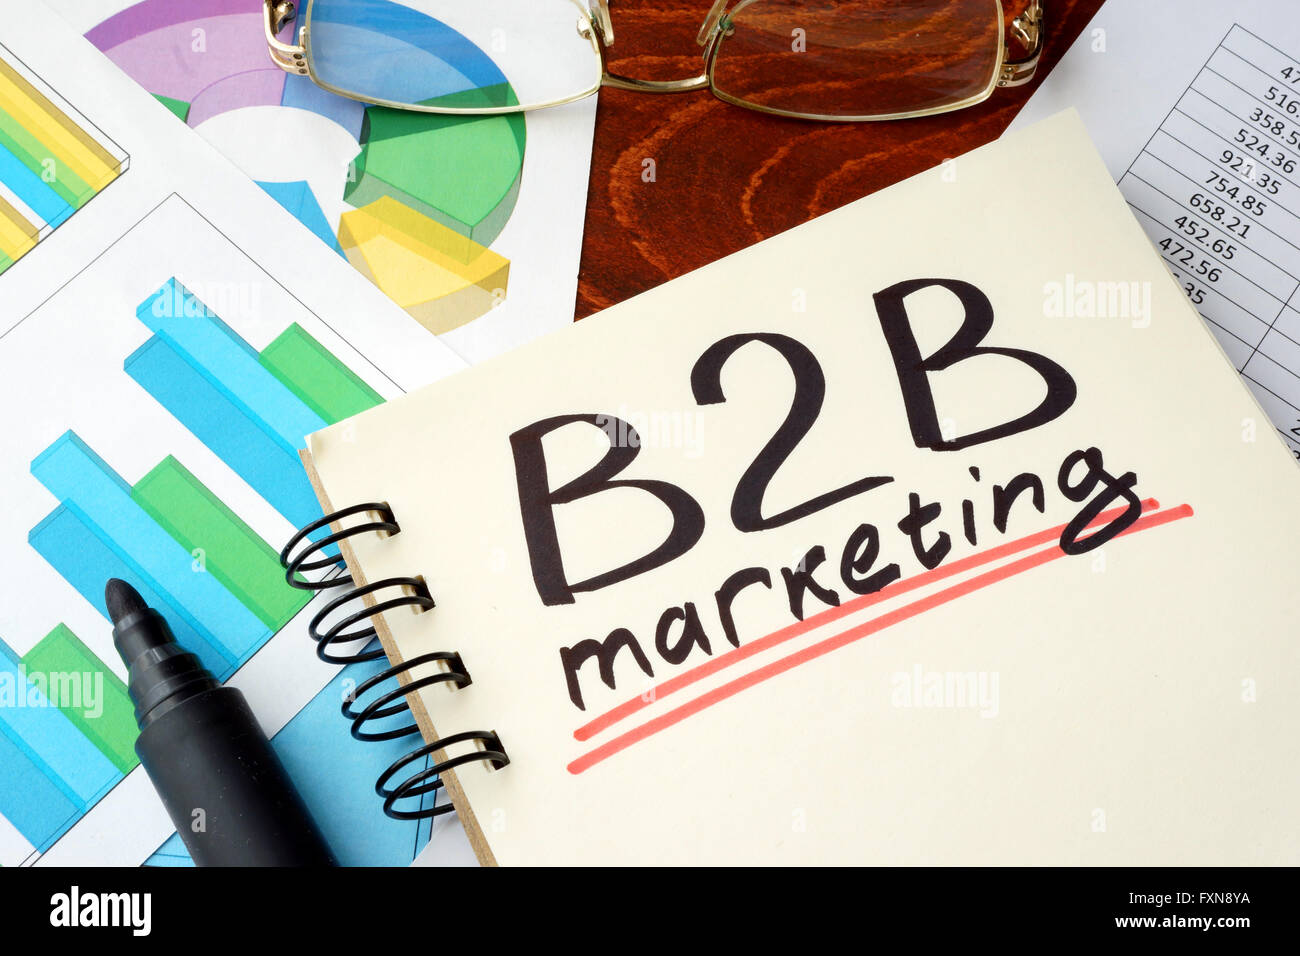 Words b2b marketing written on a notebook. Business concept. Stock Photo